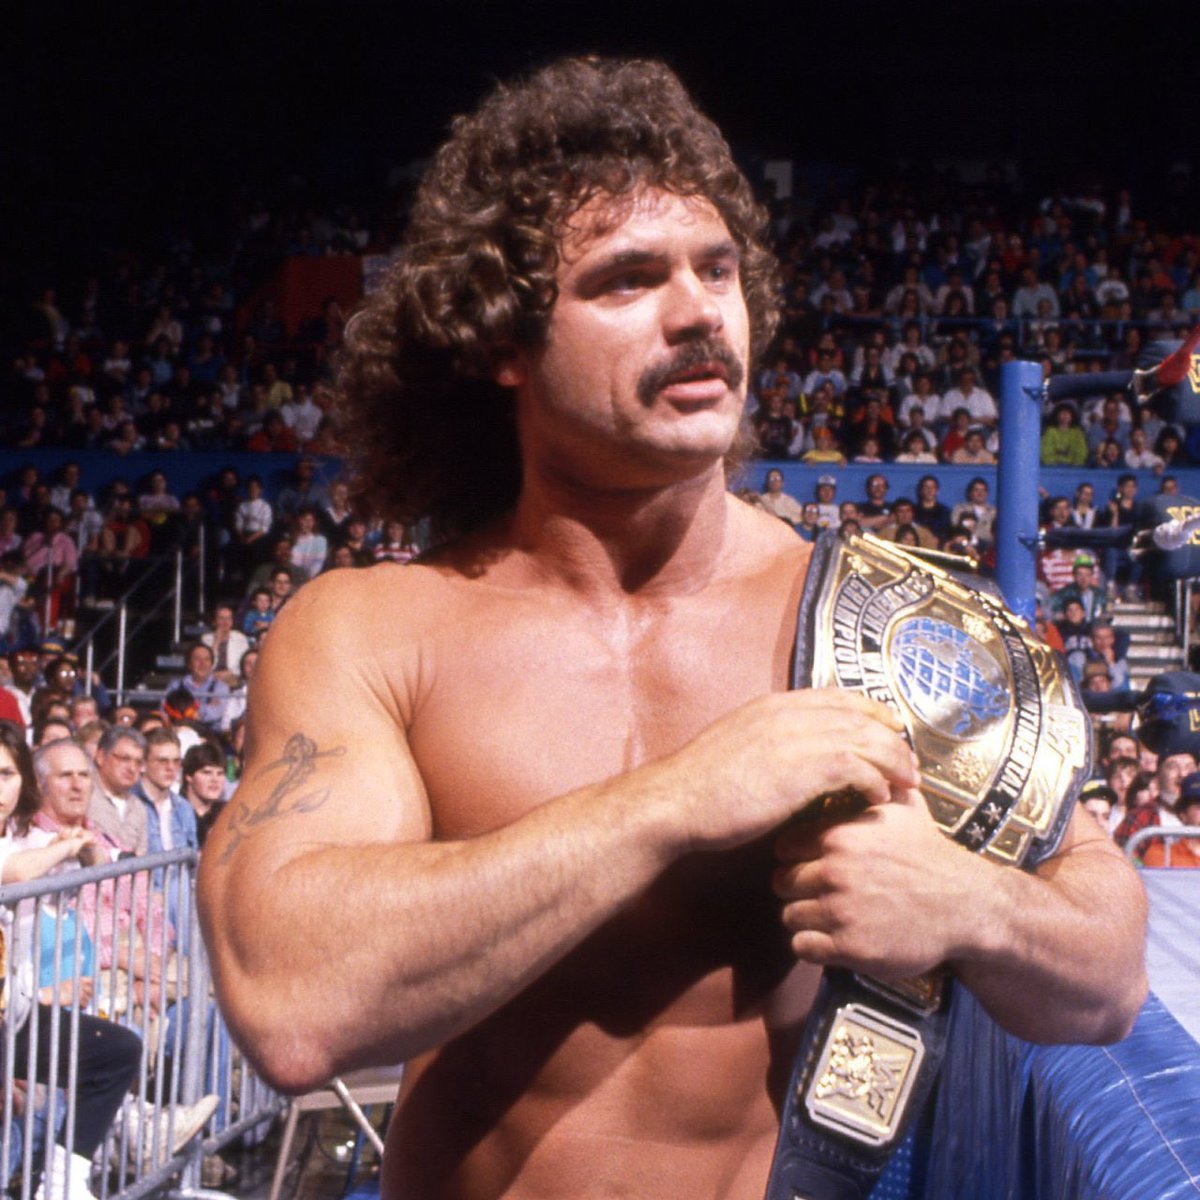 80's Wrestling on X: "Who else loved “Ravishing” Rick Rude's run as Intercontinental  Champion? https://t.co/lyakhS8qhn" / X